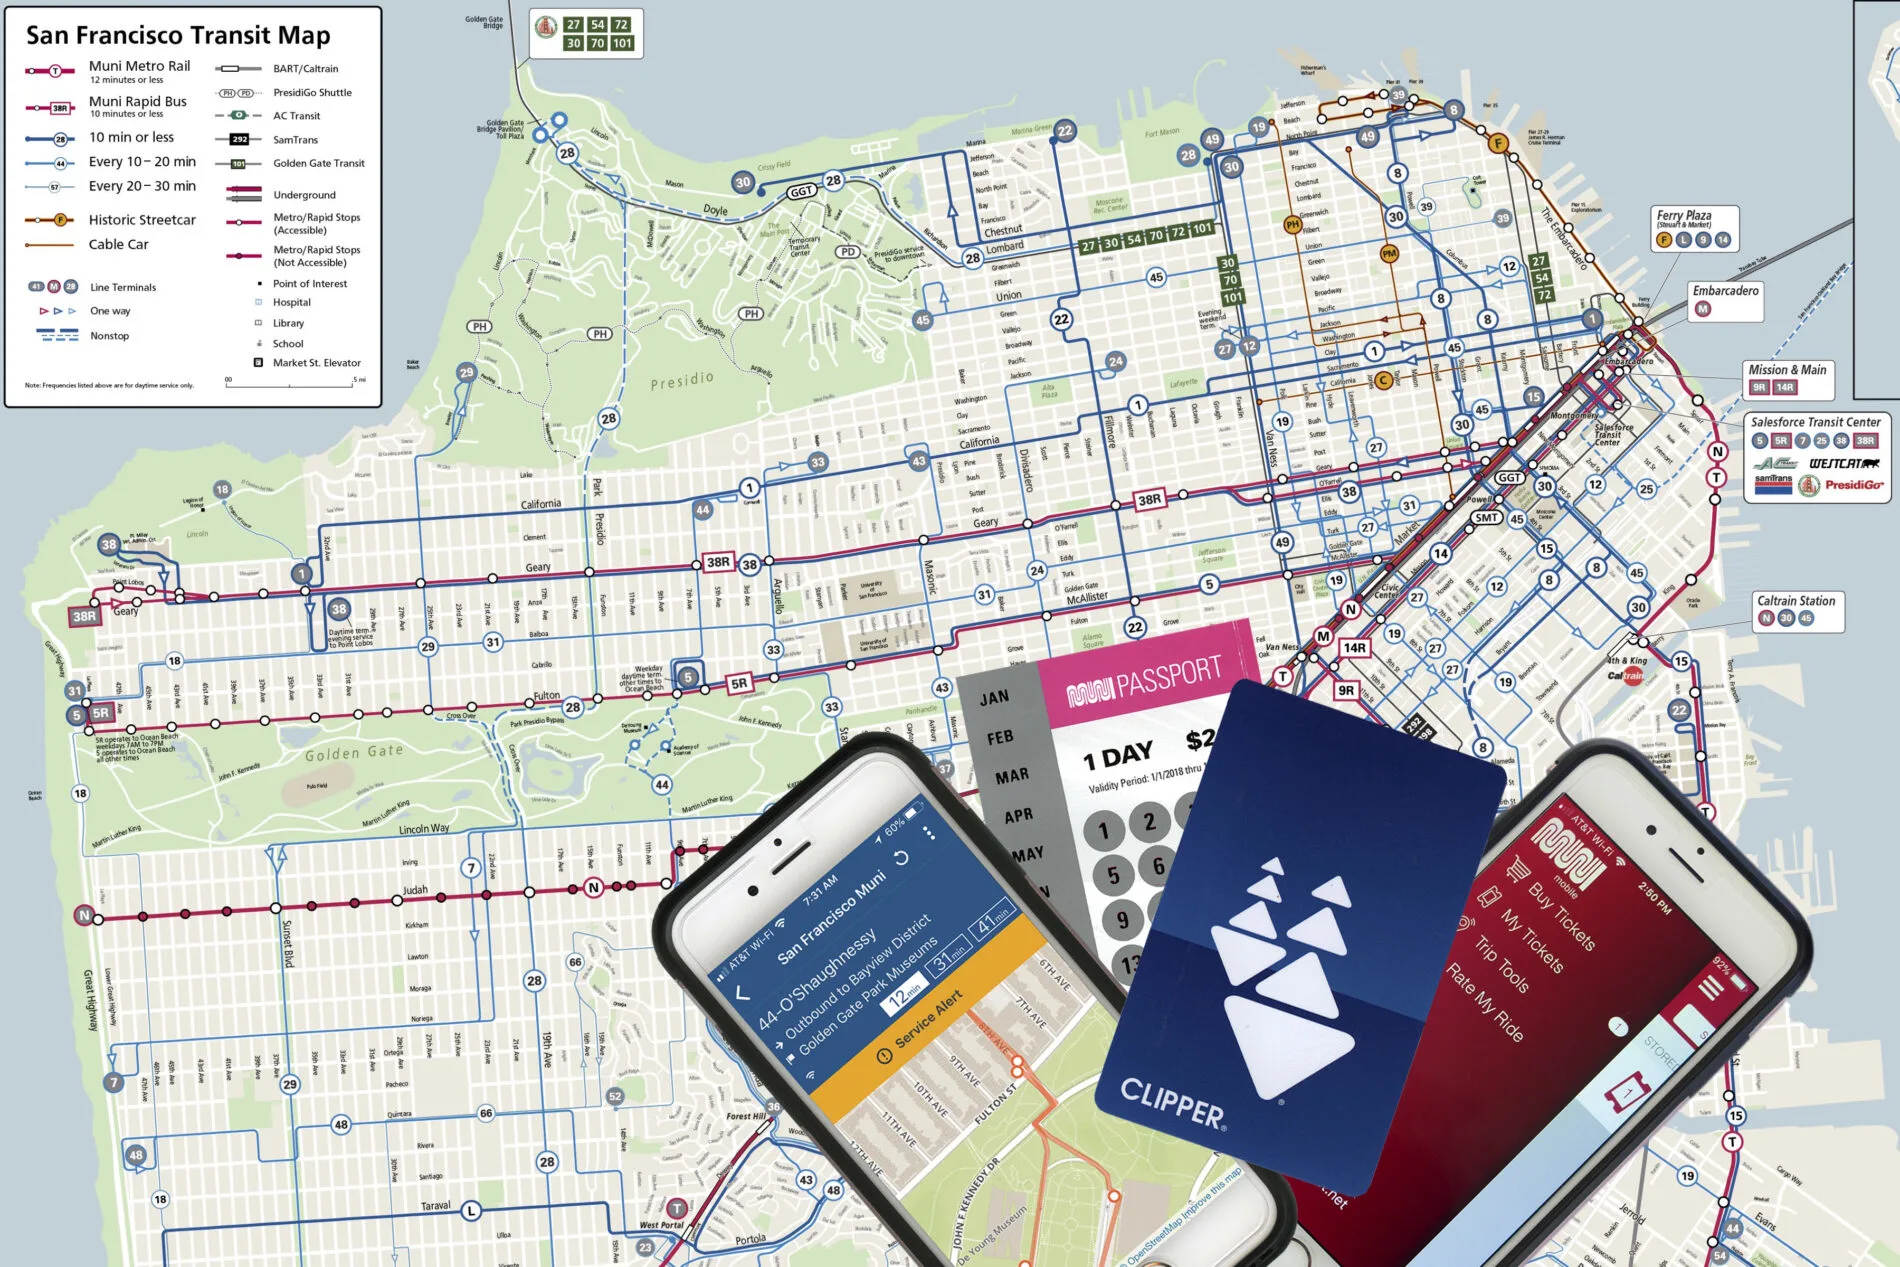 Tools for using San Francisco public transit including a San Francisco Muni map. muni next bus, MuniMobile, and Clipper Card.